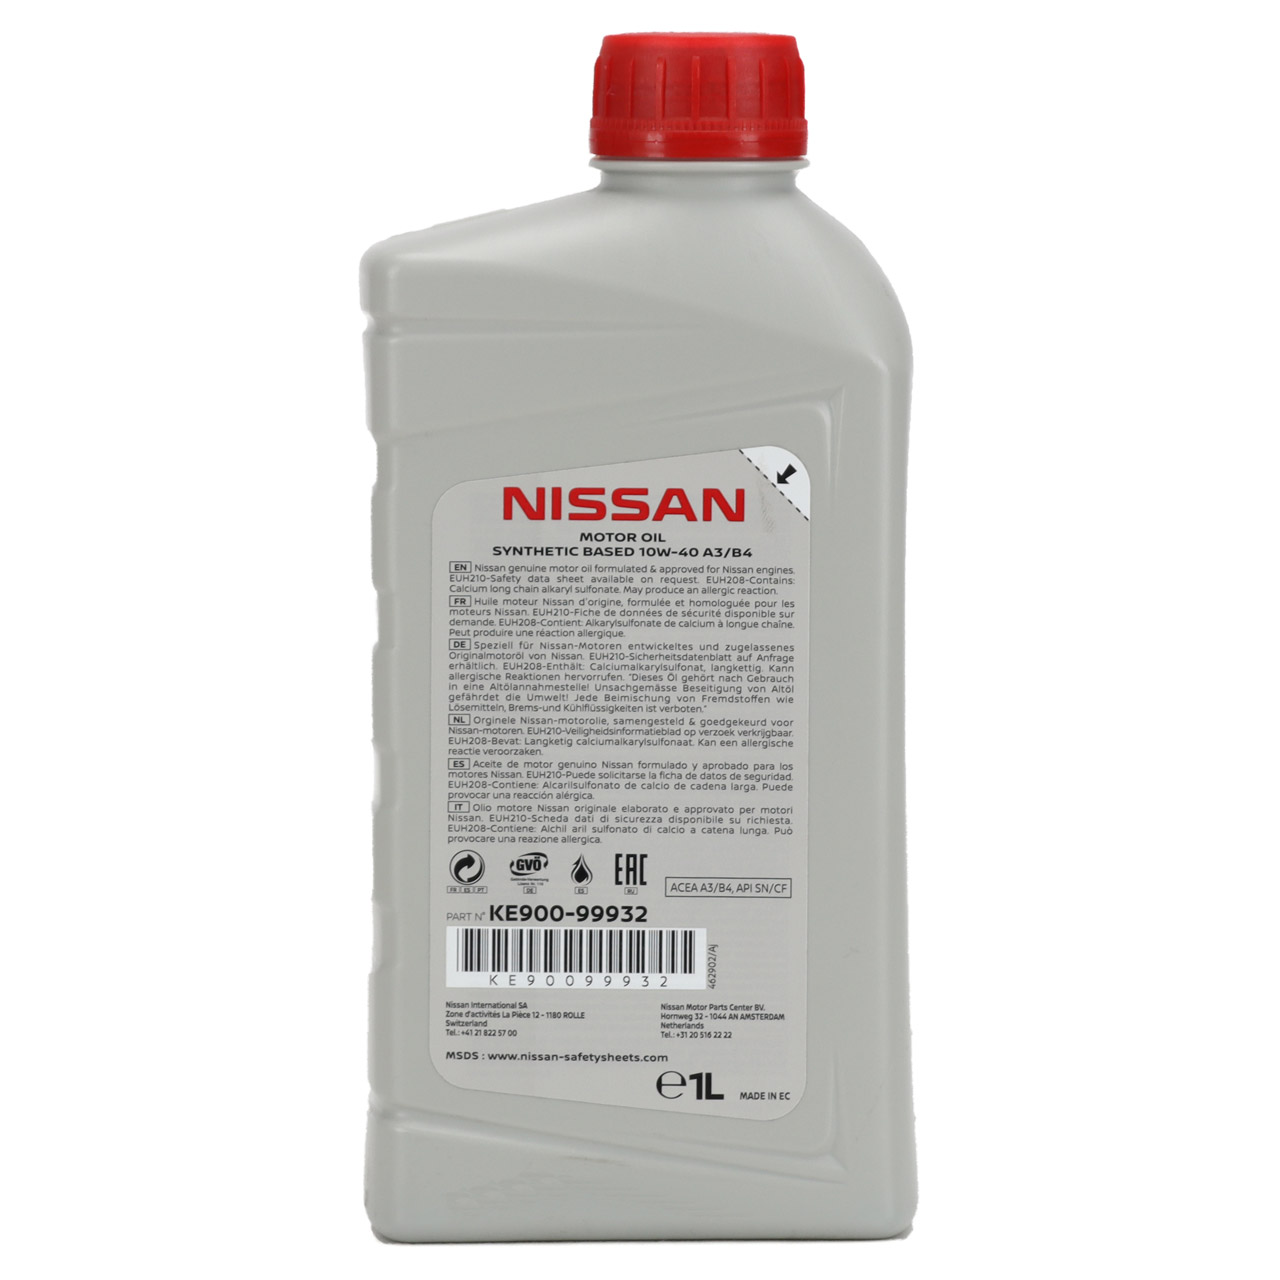 1L 1Liter ORIGINAL Nissan Motoröl Öl 10W-40 10W40 ACEA A3/B4 API SN/CF KE900-99932